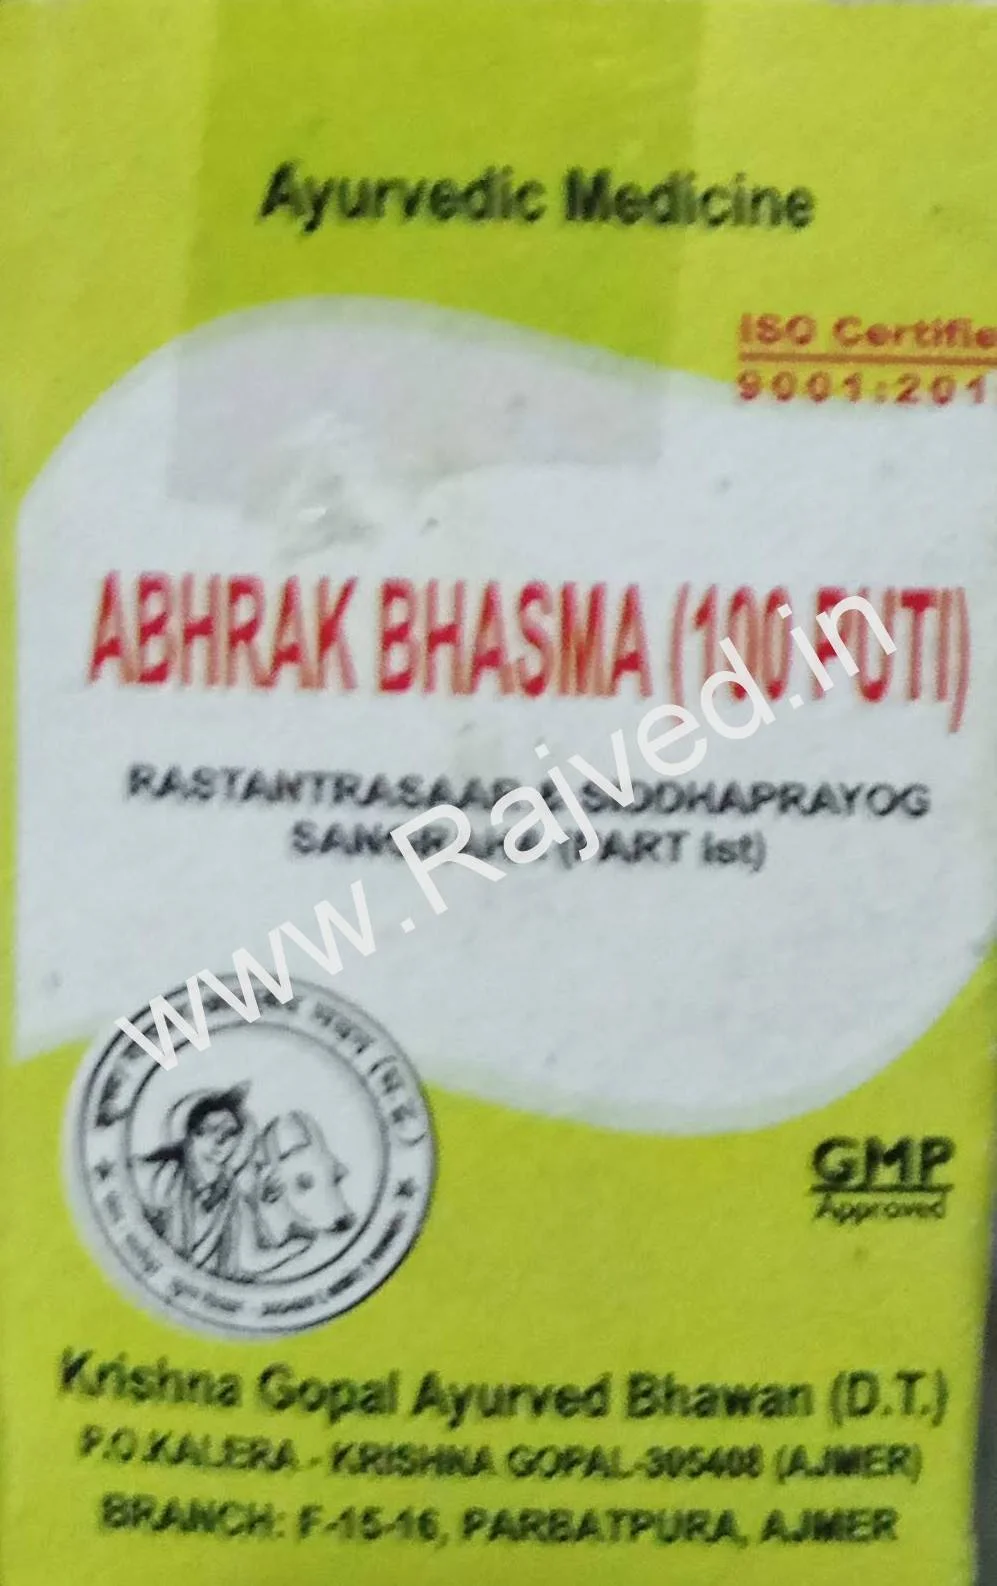 abhrak bhasma 100 puti 10gm upto 20% off Krishna Gopal Ayurved bhavan